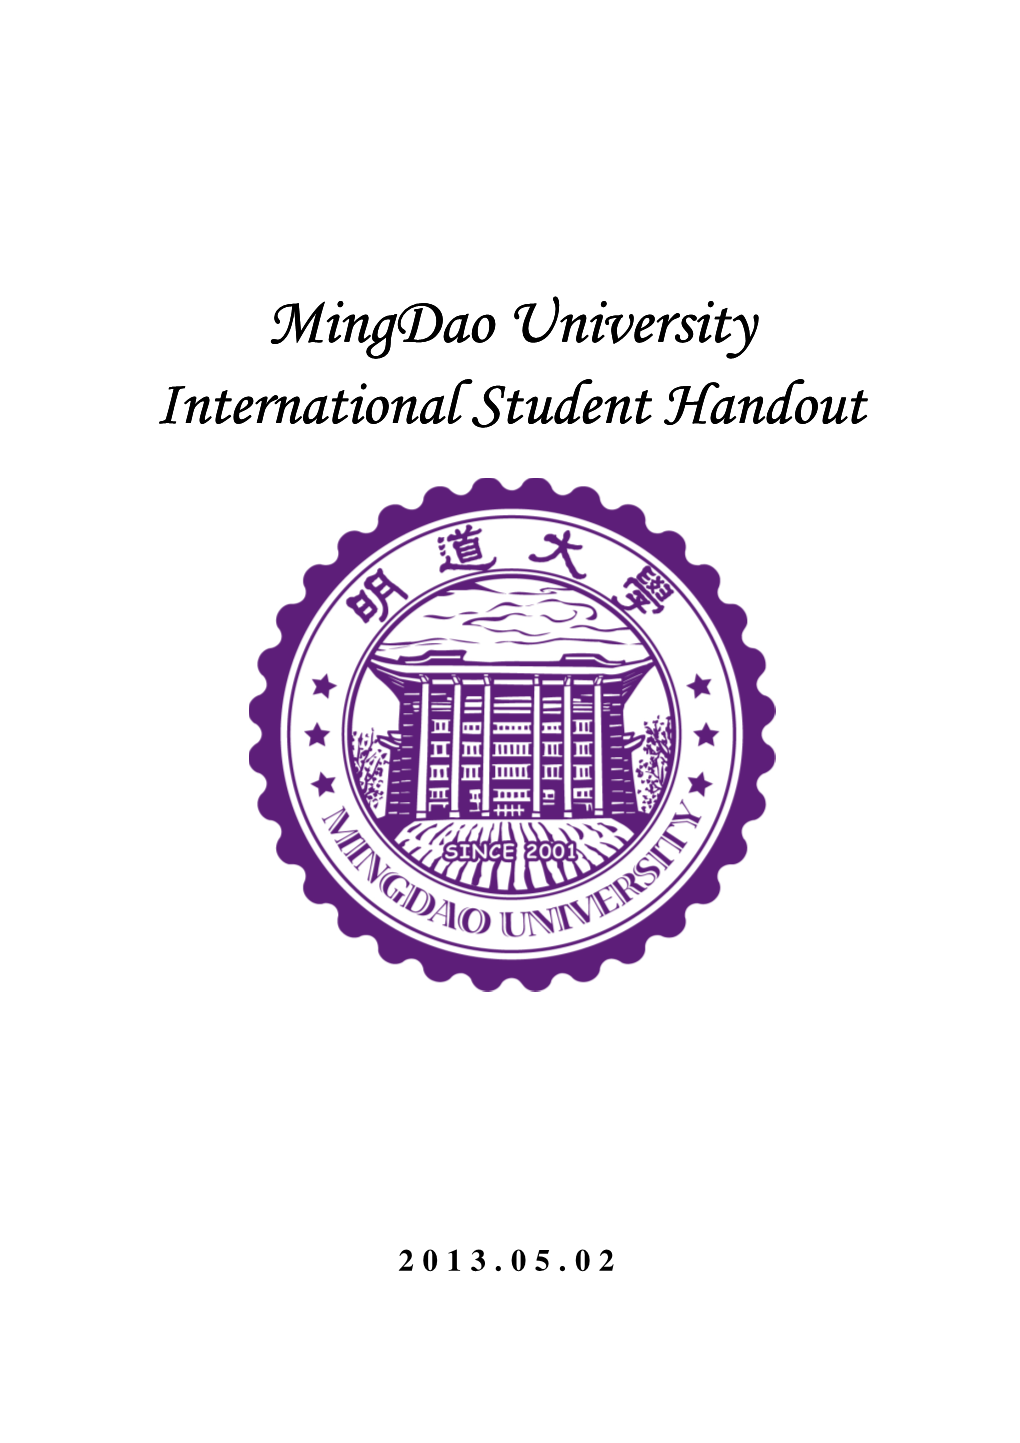 Mingdao University Mingdao University